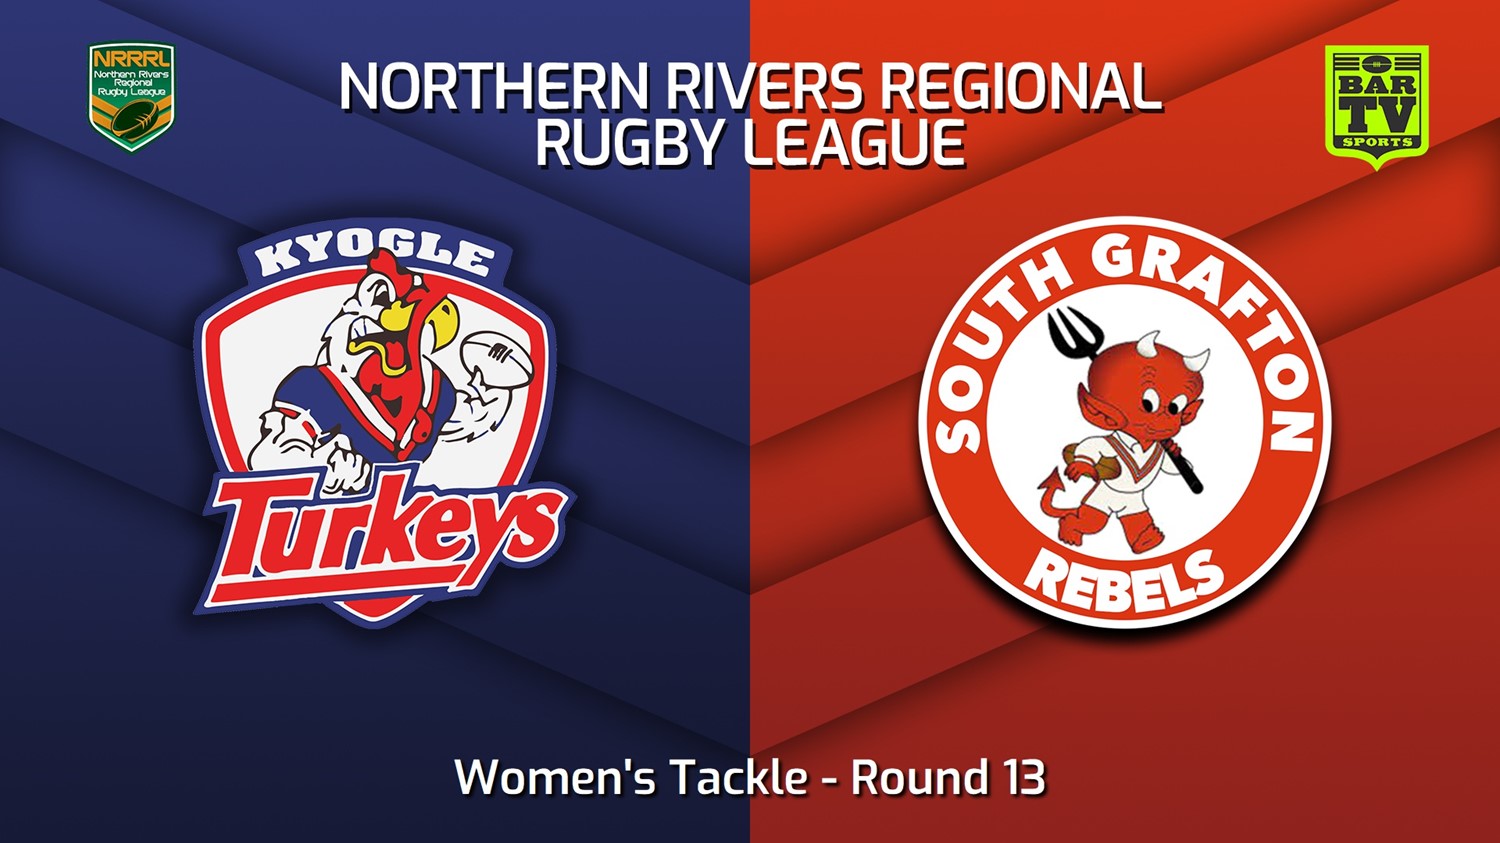 230715-Northern Rivers Round 13 - Women's Tackle - Kyogle Turkeys v South Grafton Rebels Slate Image